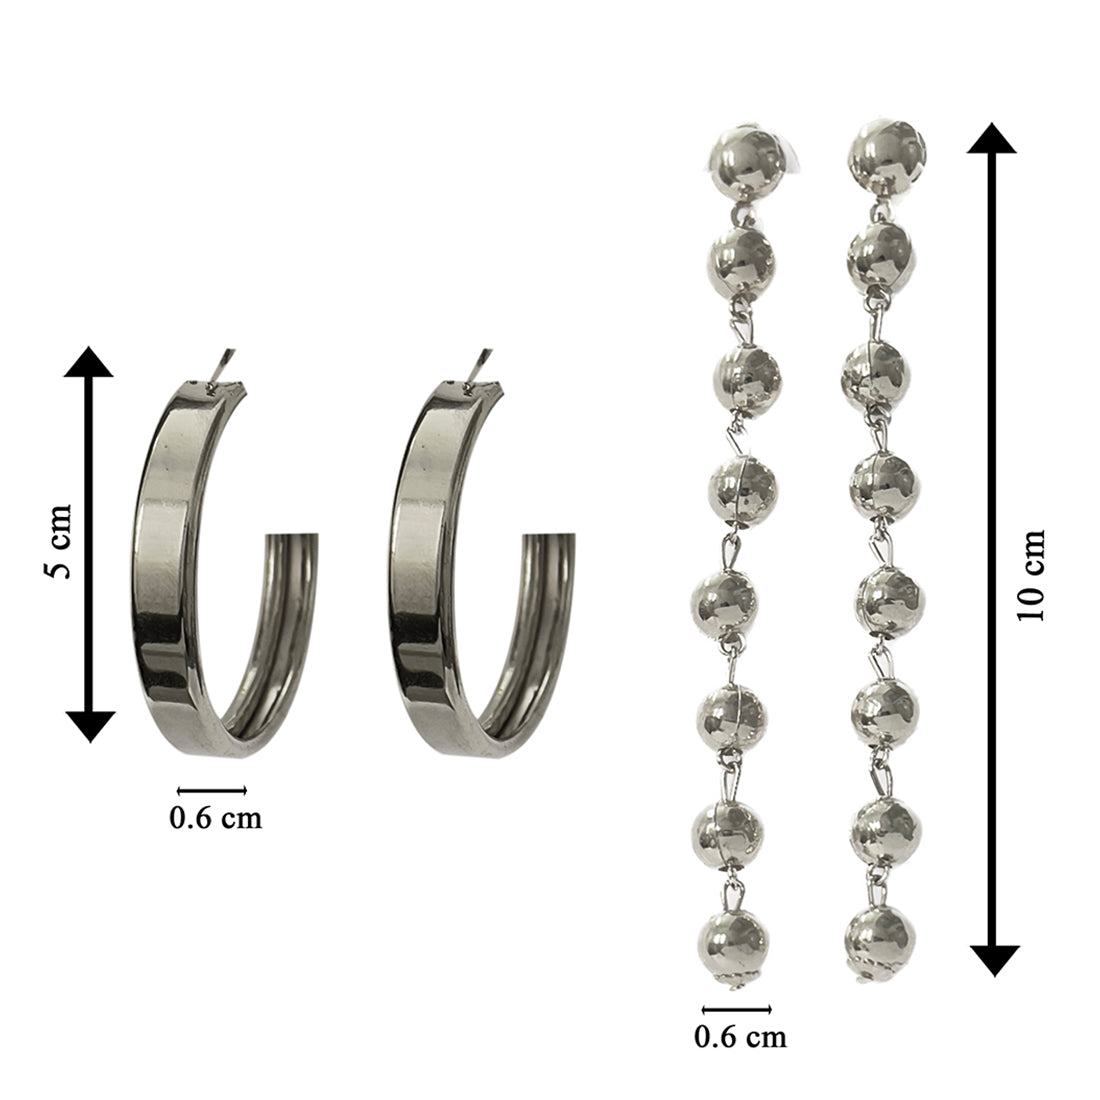 Set Of 2 Metallic Gold-Toned Long Circular Drop Earrings & Hoop Earrings